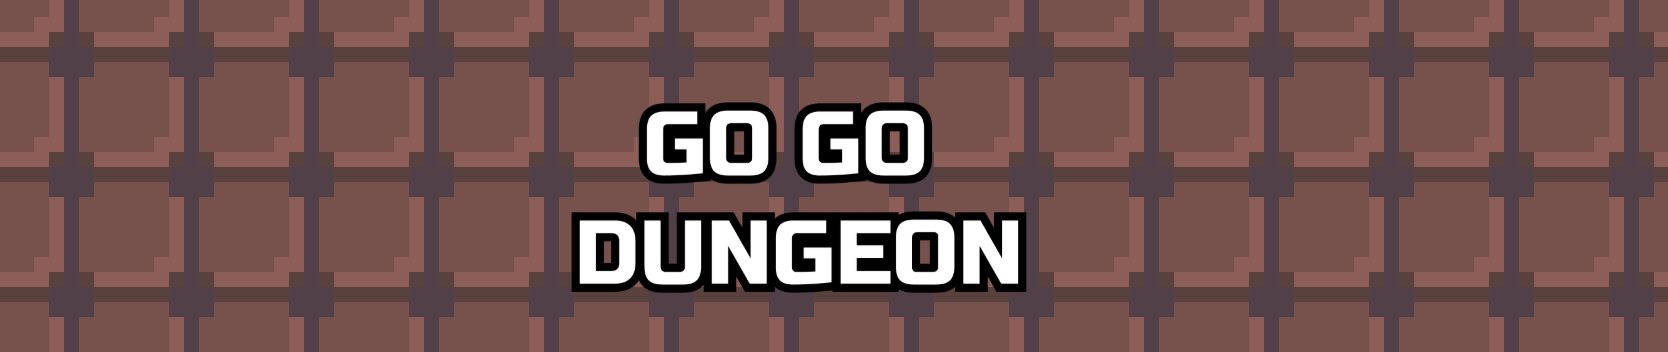 Go Go Dungeon